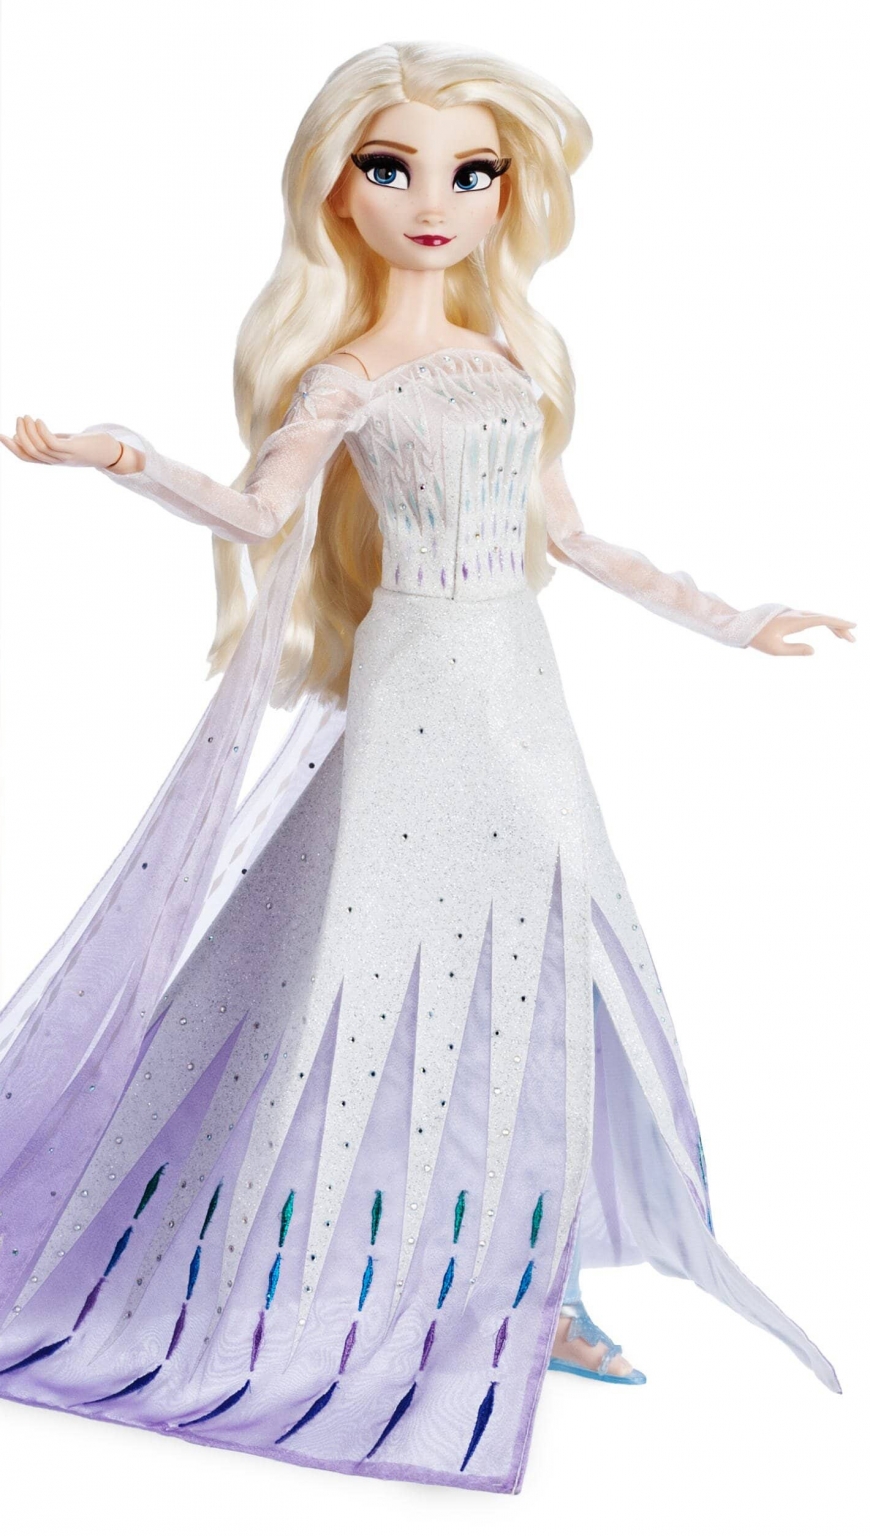 Frozen 2 Elsa white dress limited edition doll